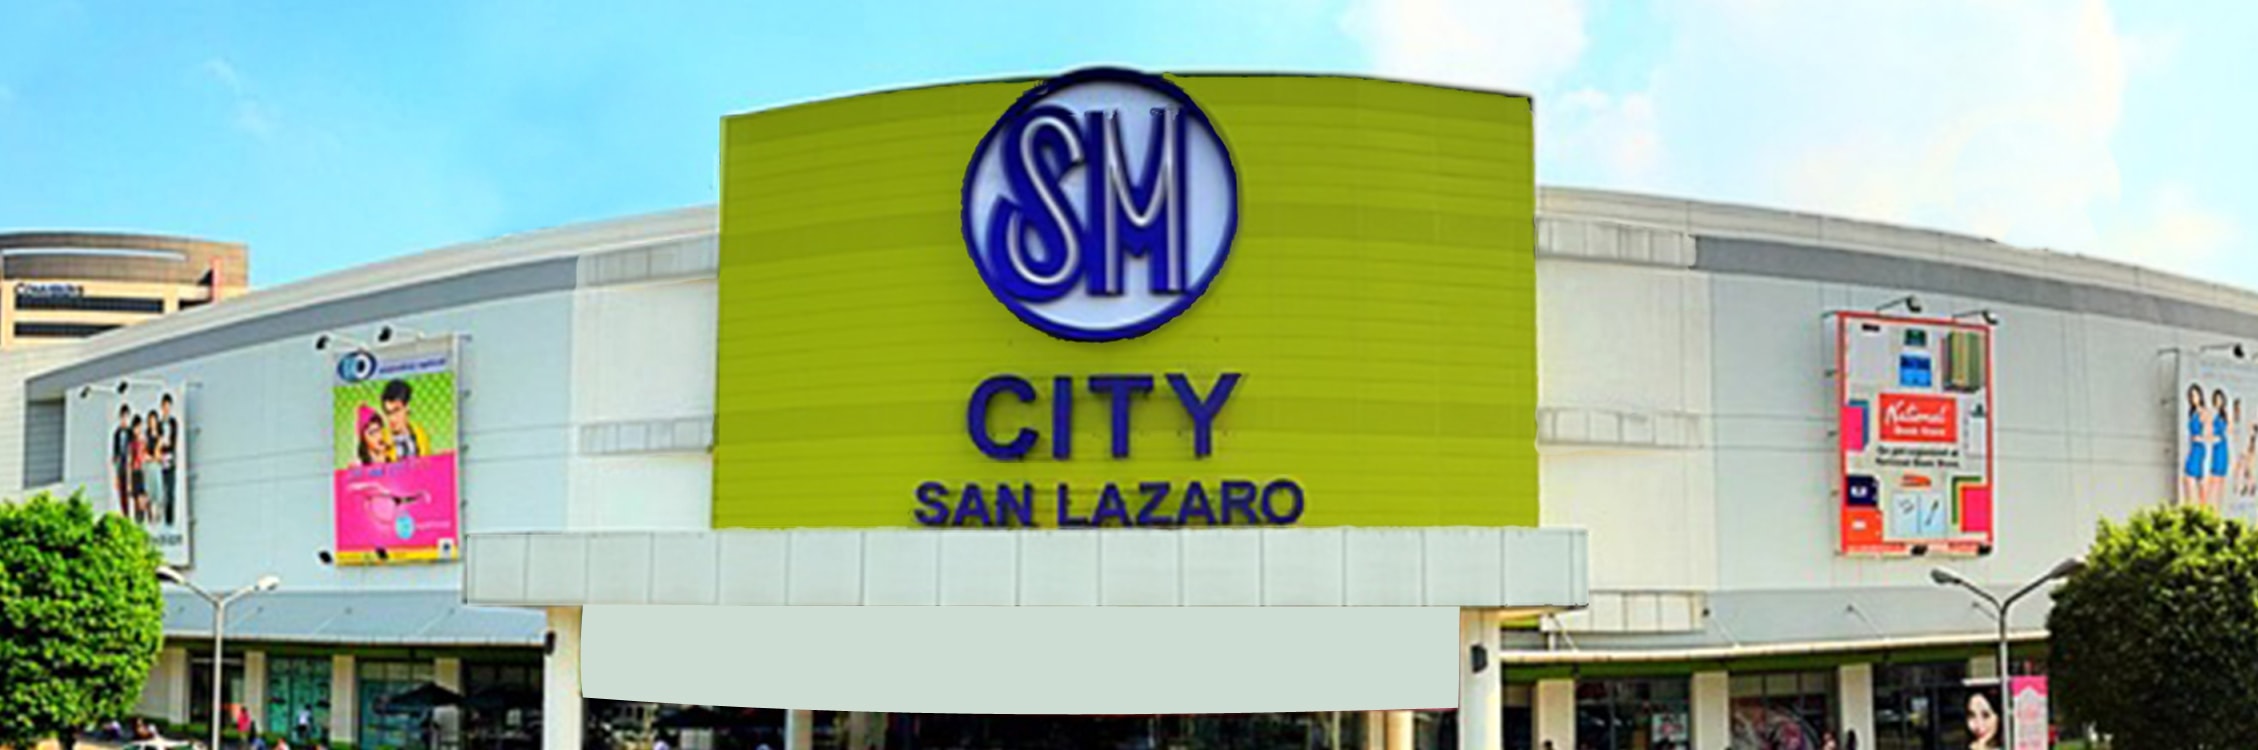 SM City San Lazaro